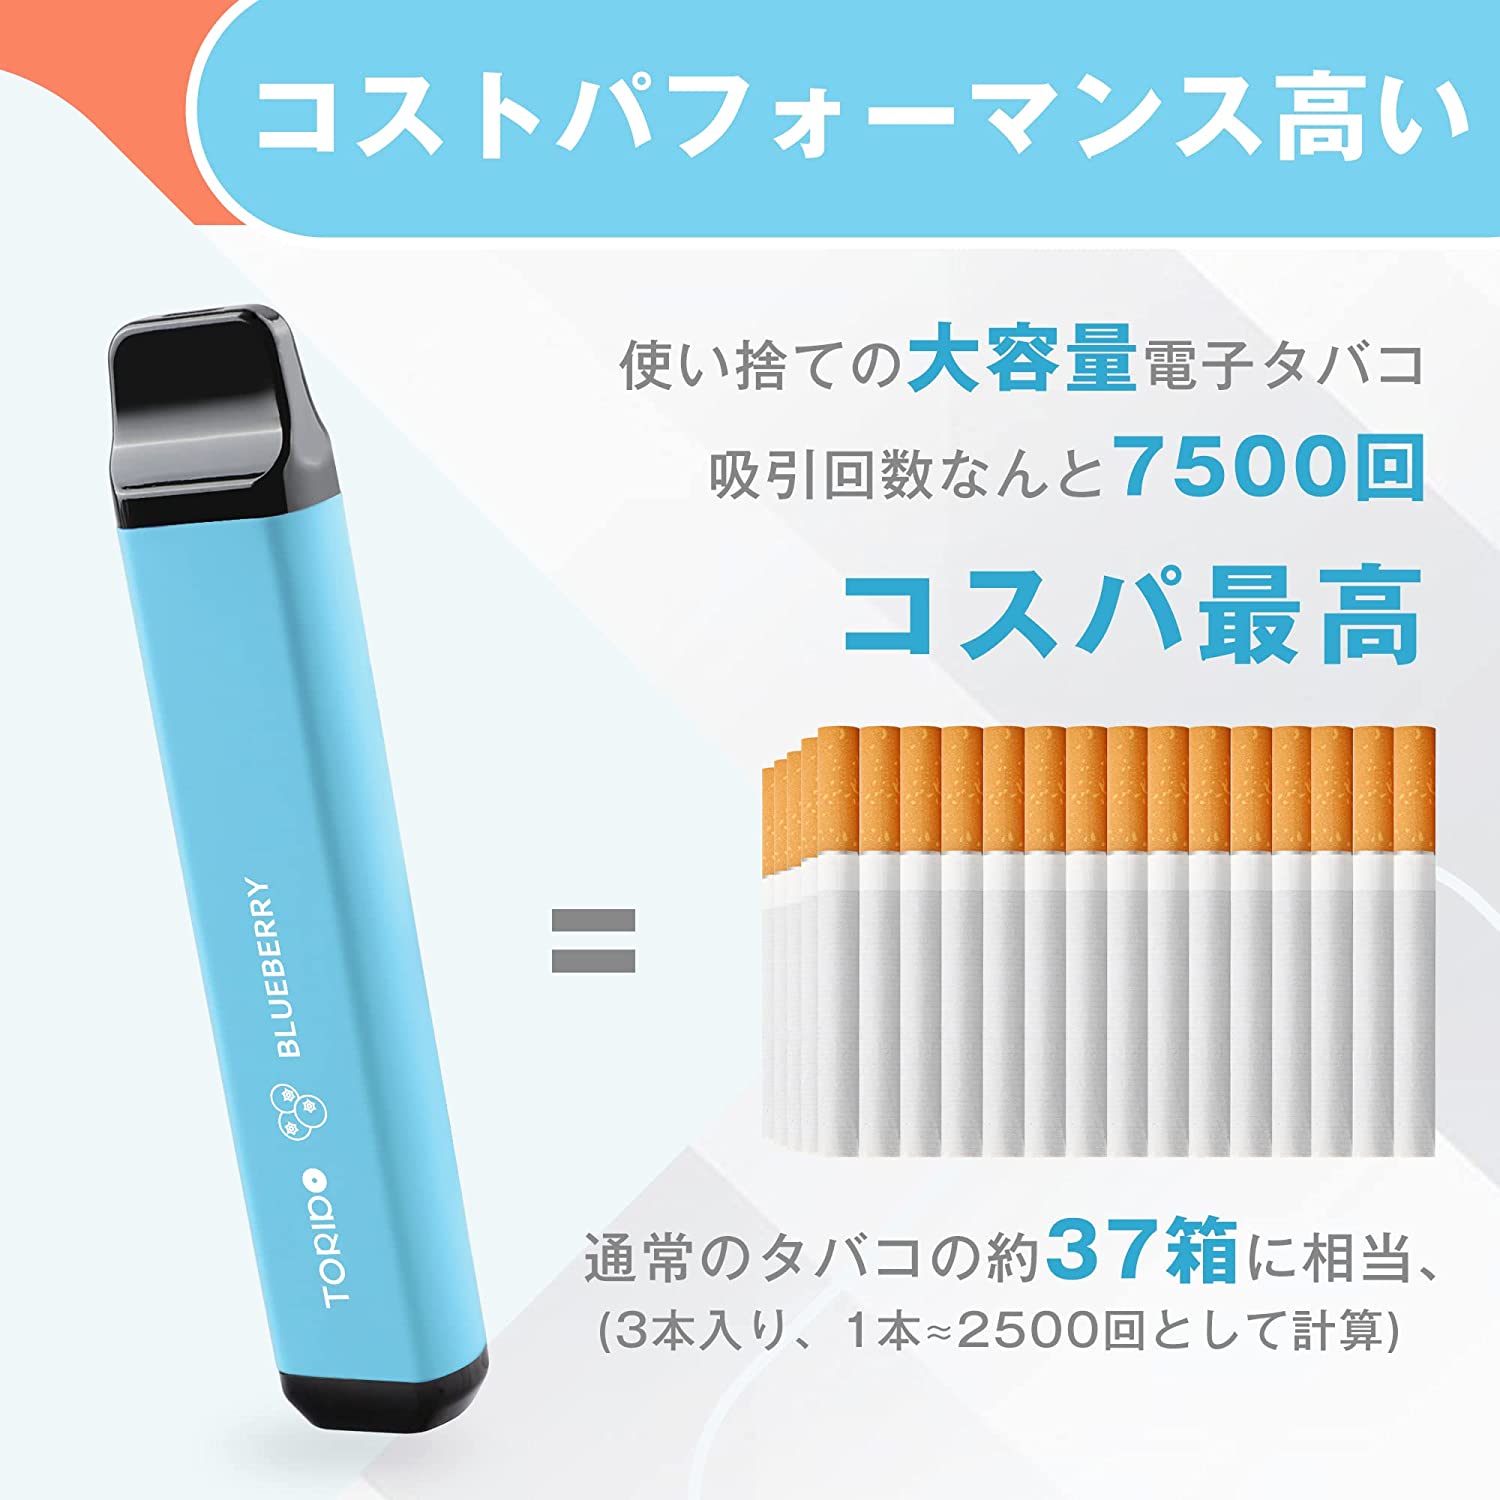 VAPE Elektronische Zigarette Einweg-Explosivrauch Nichtraucher-Vape MIX-2 (O2 PLUS)